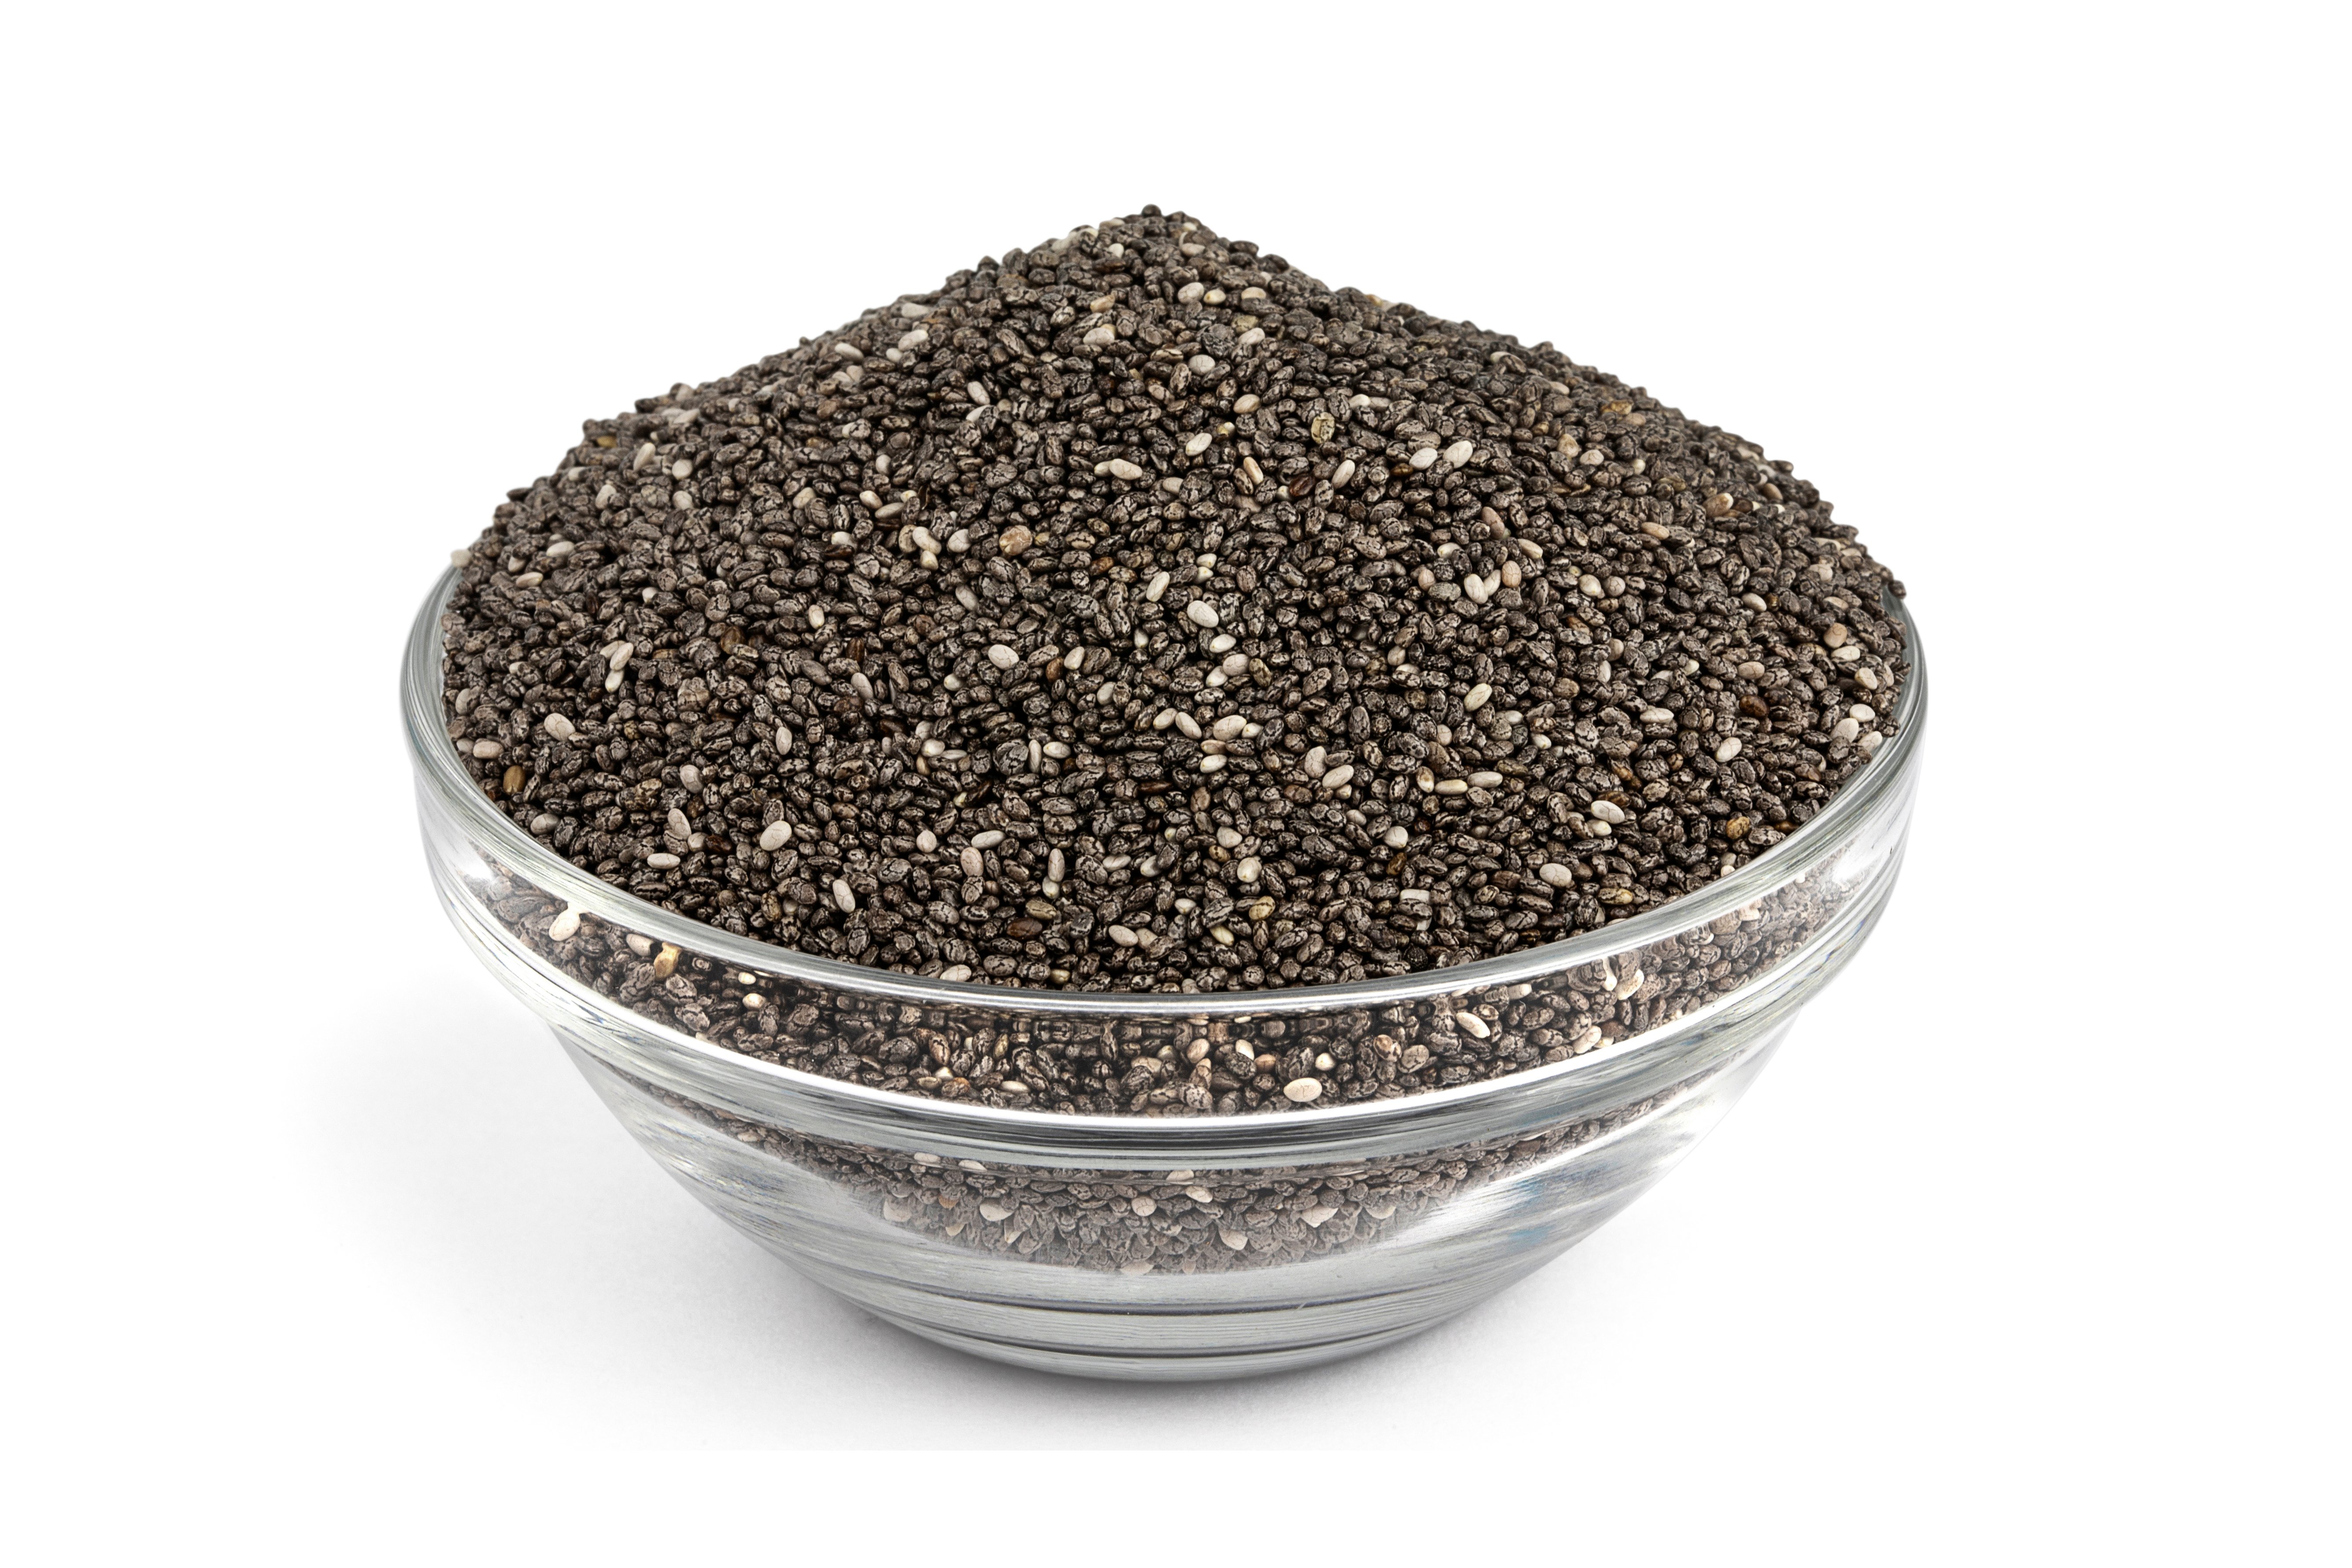 Organic Black Chia Seeds — SUPPLY Bulk Foods